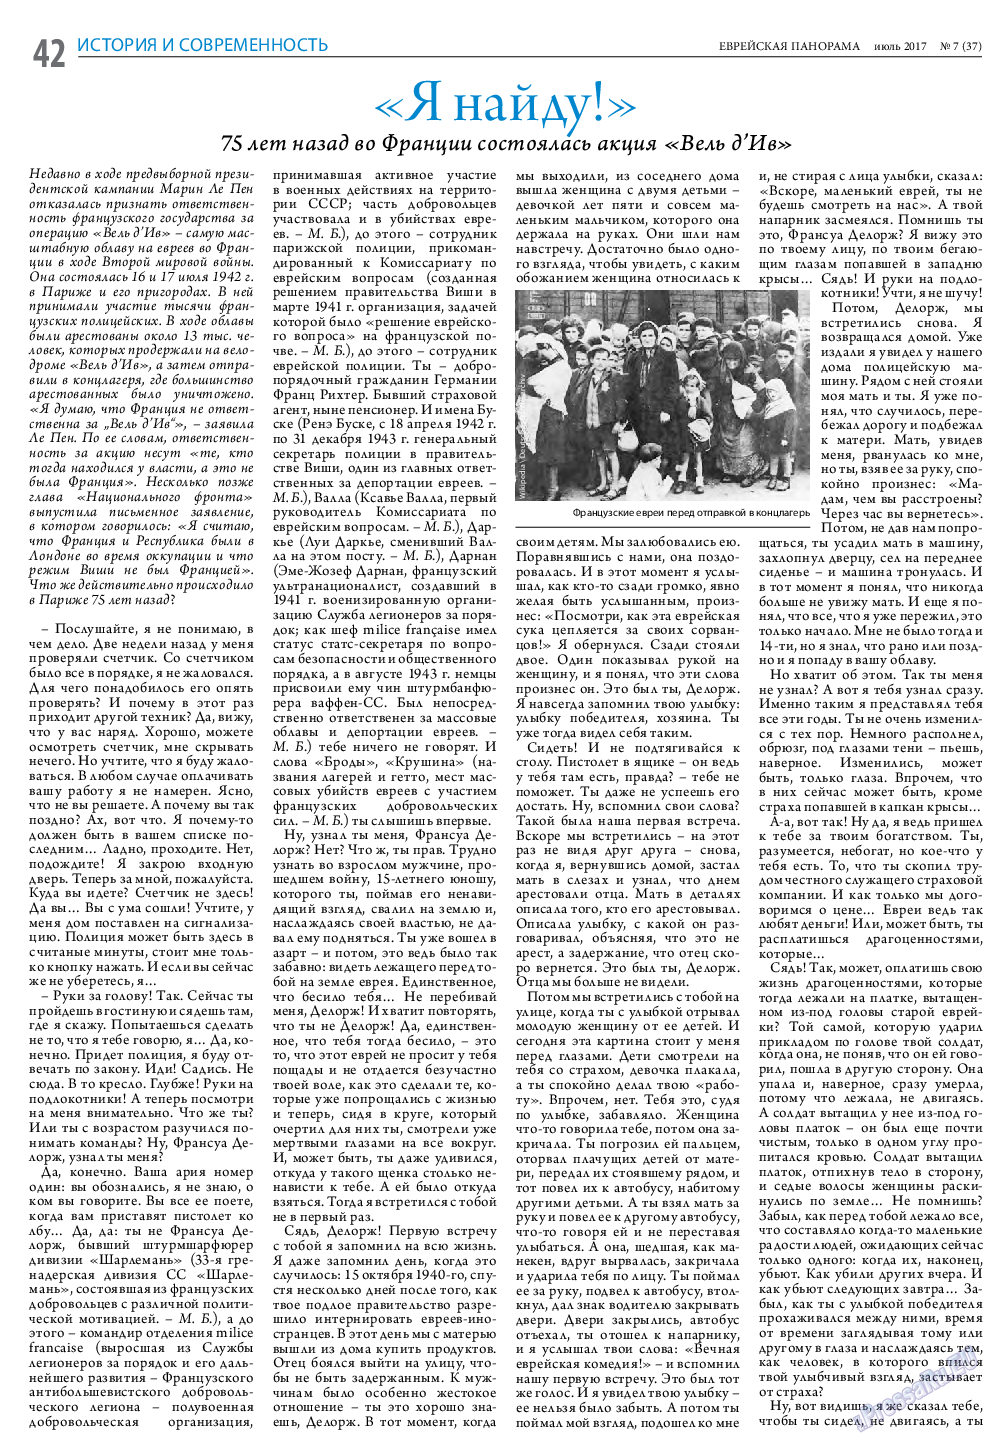 Еврейская панорама, газета. 2017 №7 стр.42